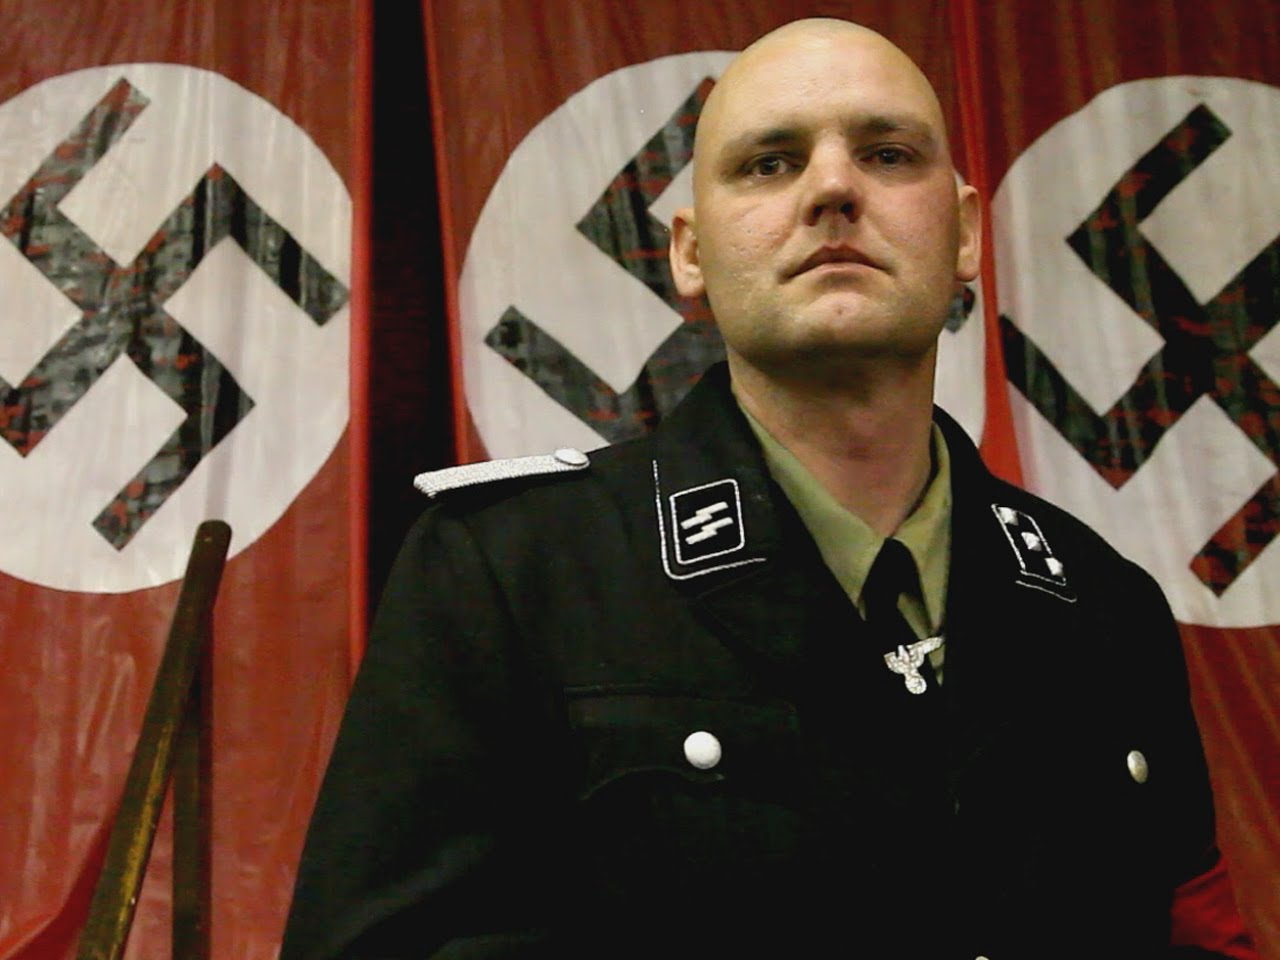 1 национал. Джефф Холл неонацист.